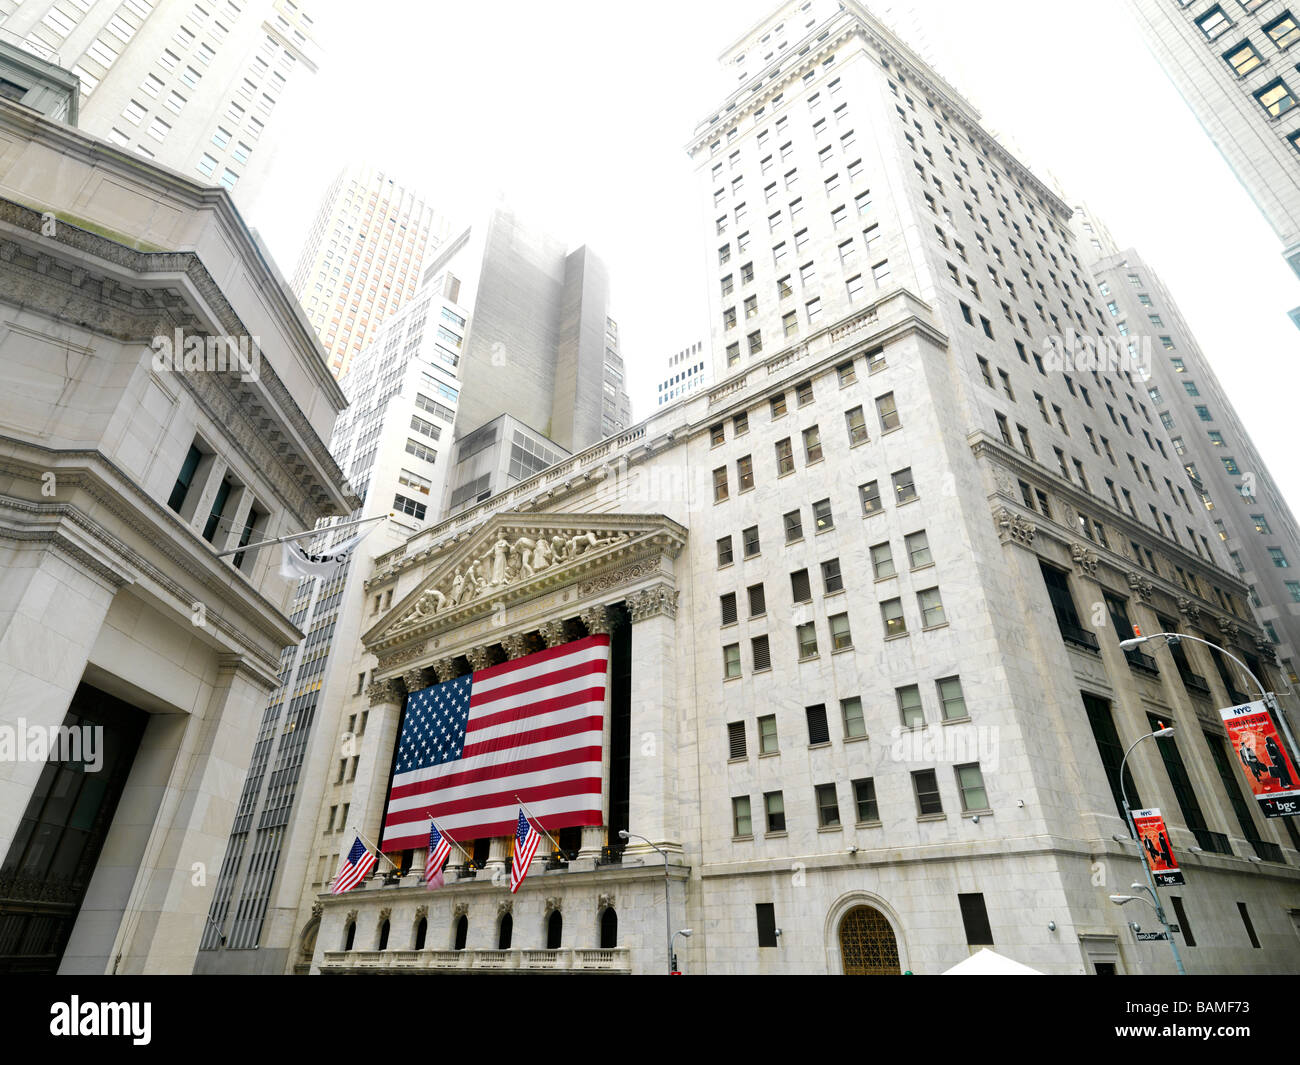 The facade of the New York Stock Exchange. Stock Photo